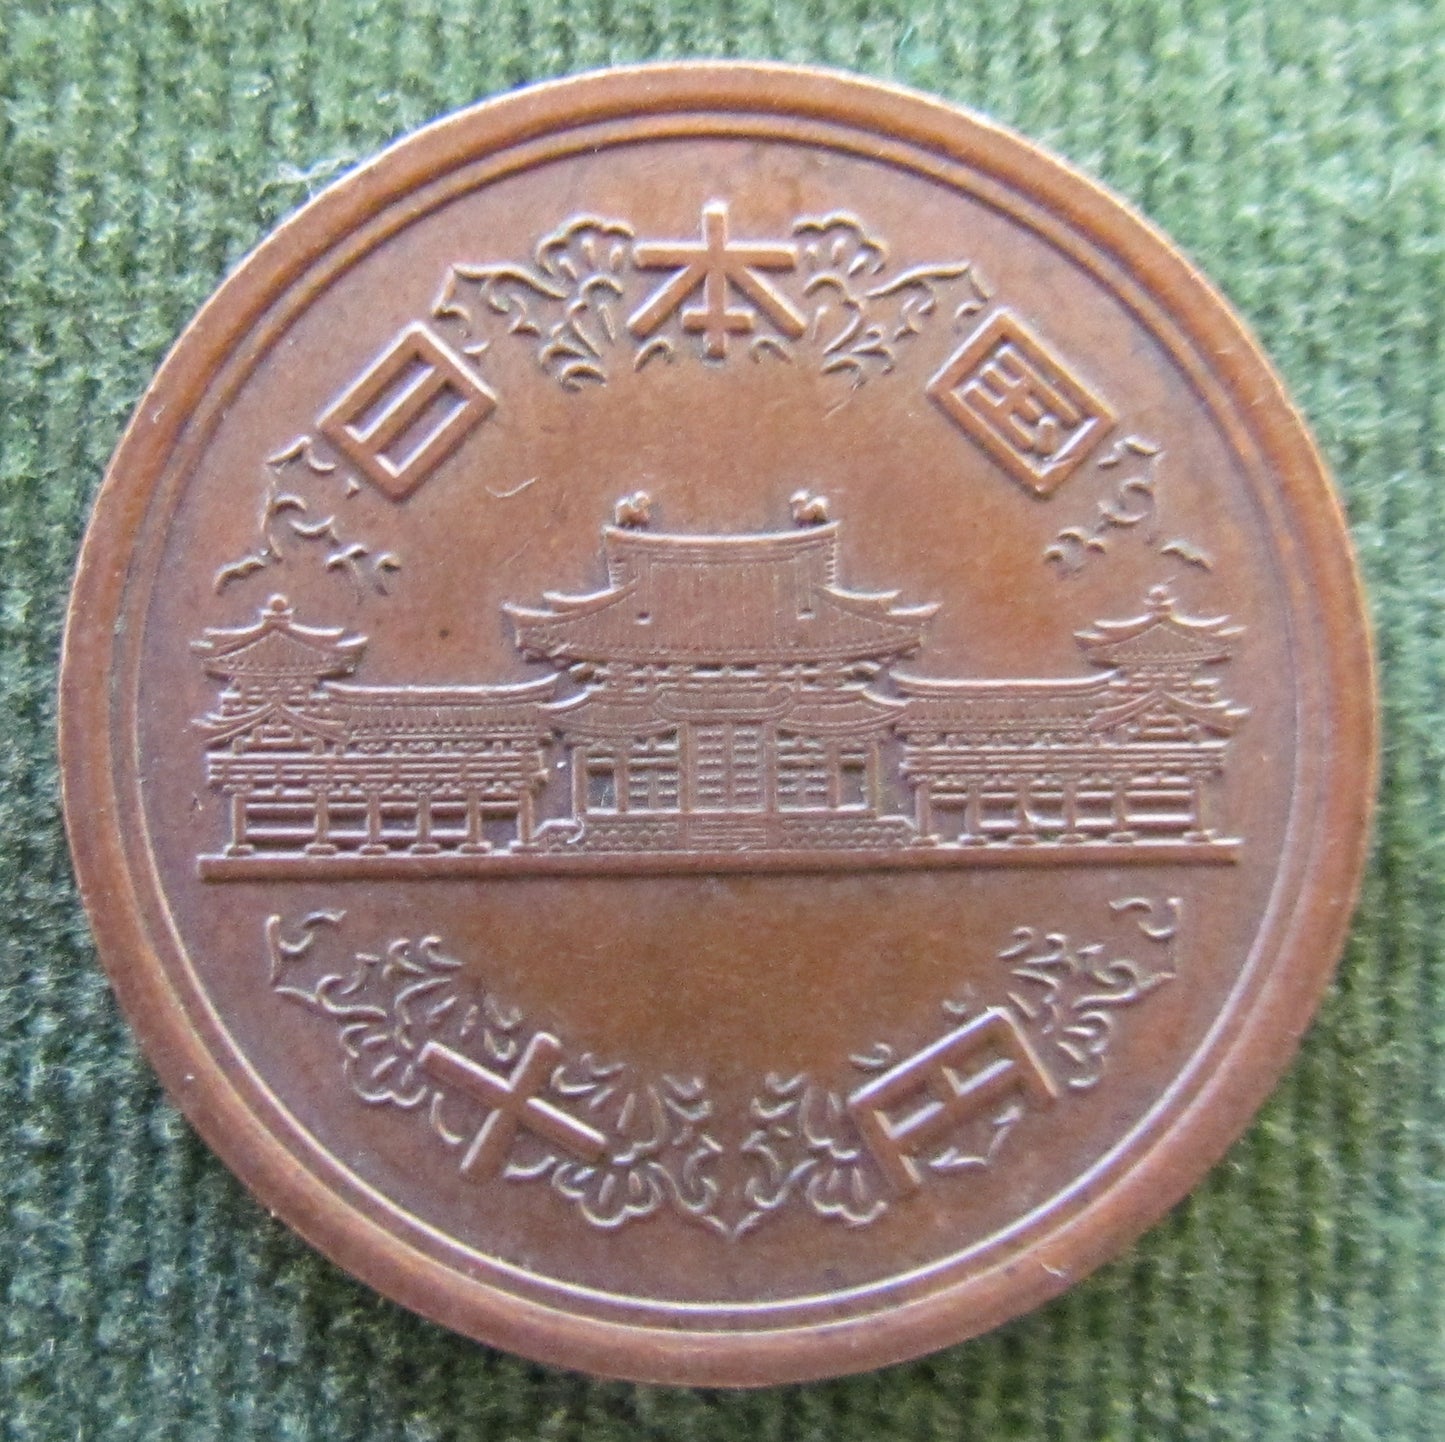 Japanese 1992 10 Yen Coin - Circulated